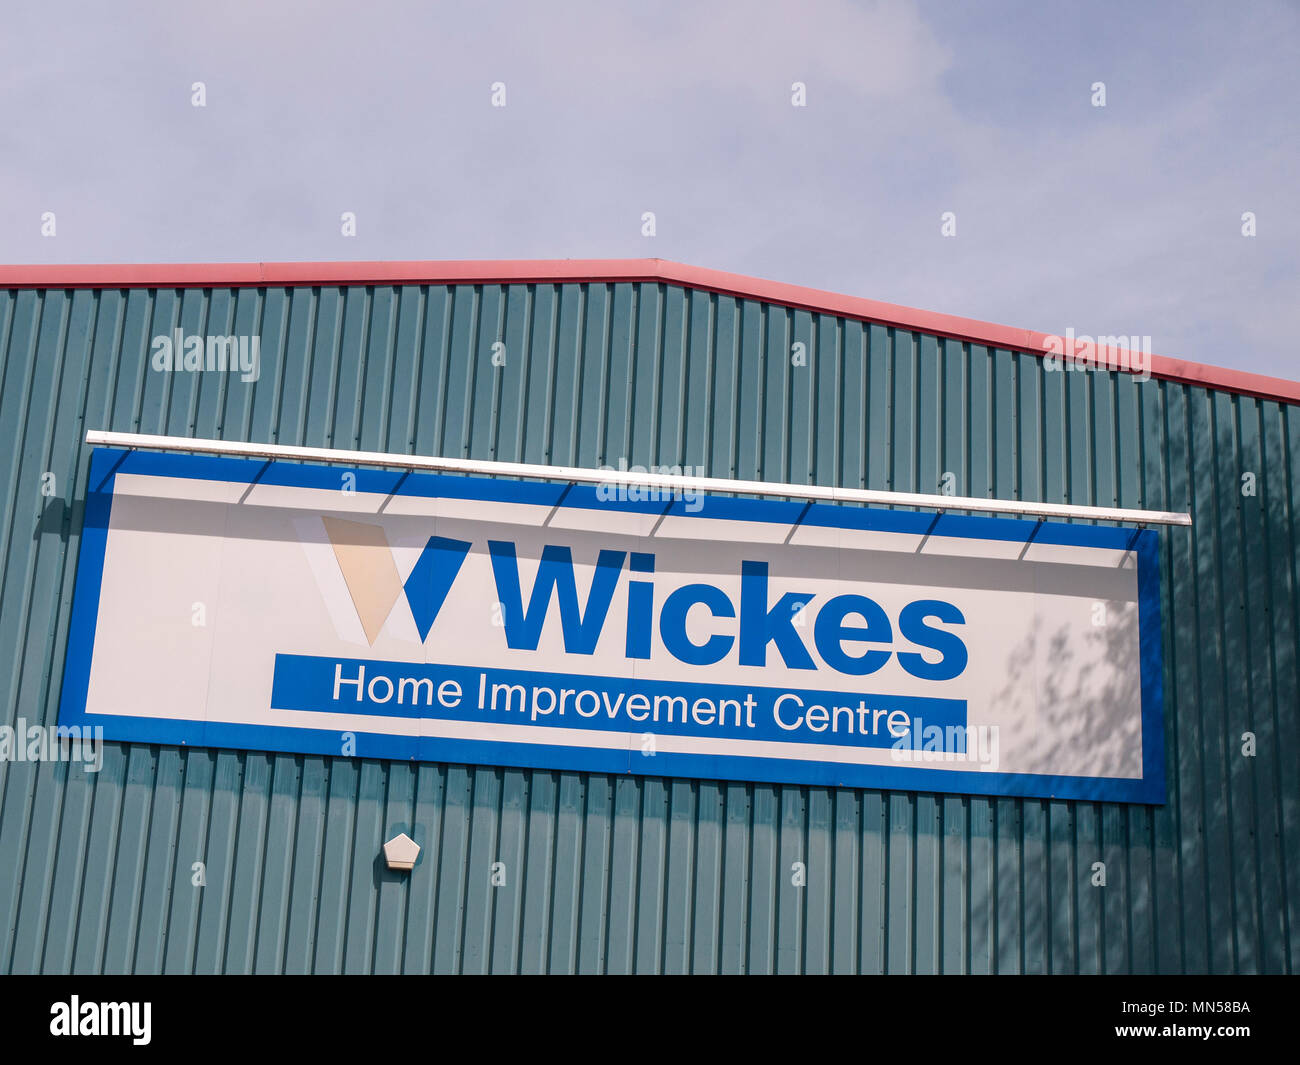 Wickes home improvement center shop Foto de stock